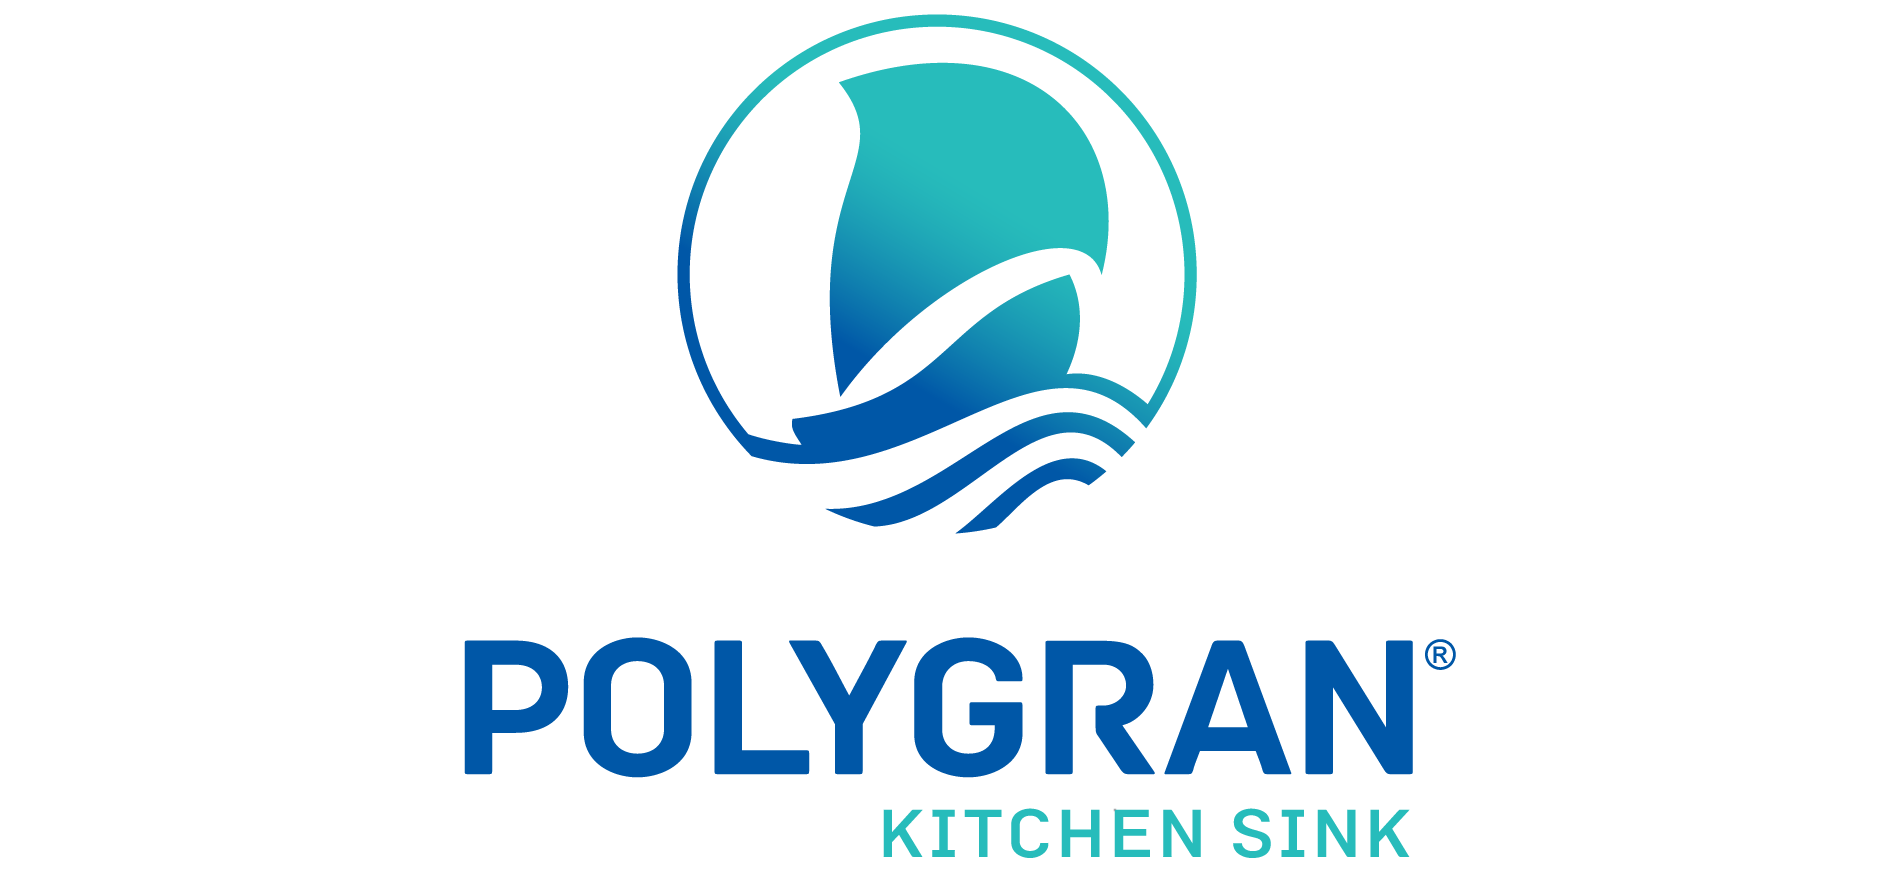 POLYGRAN